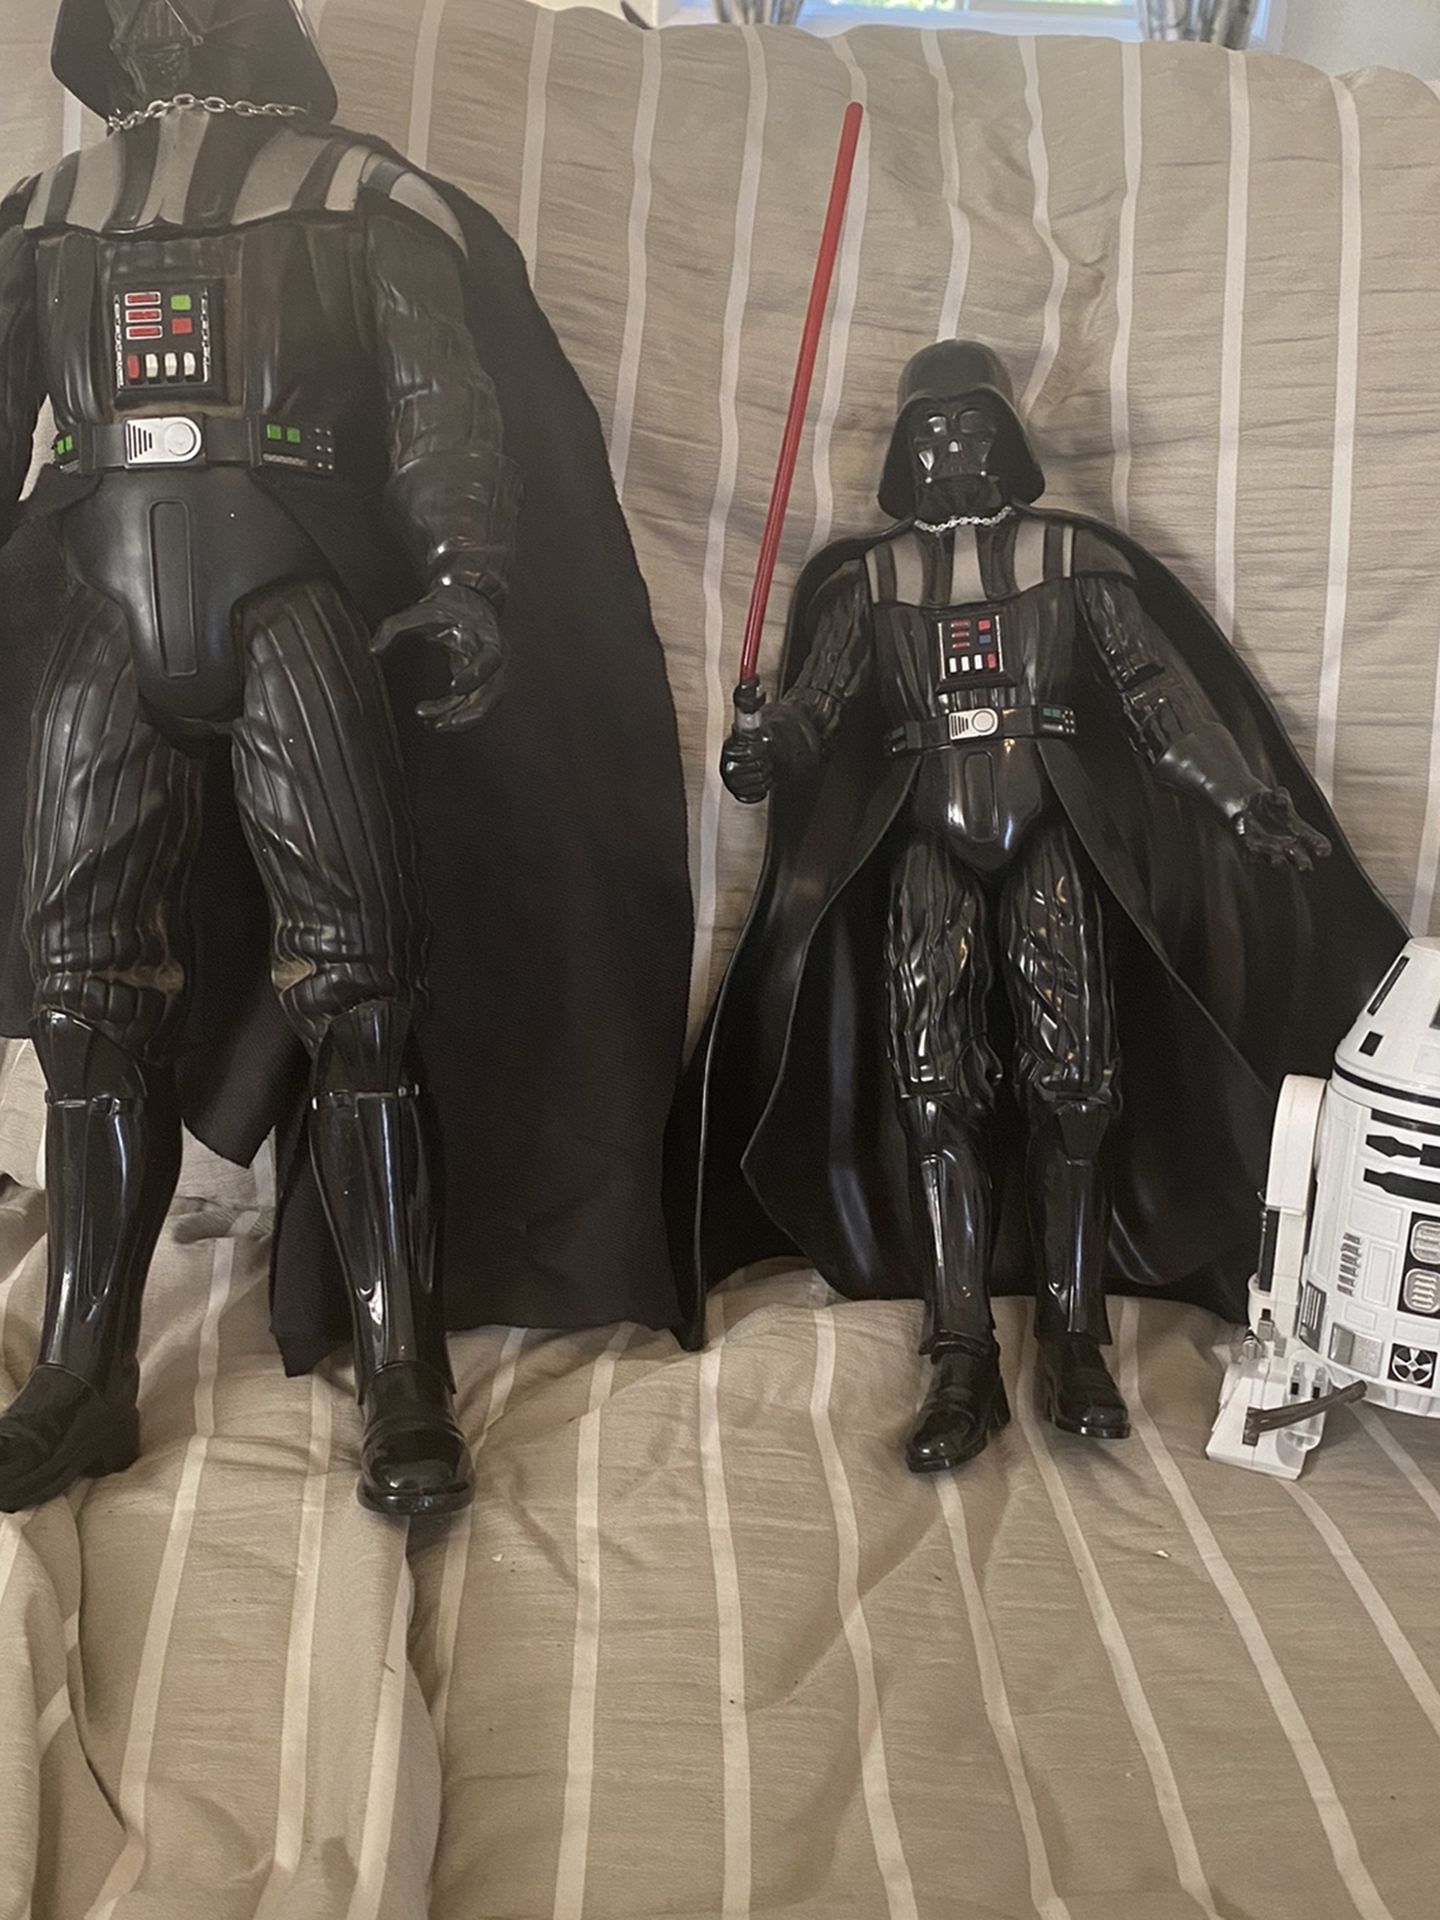 Darth Vader Star Wars Figures